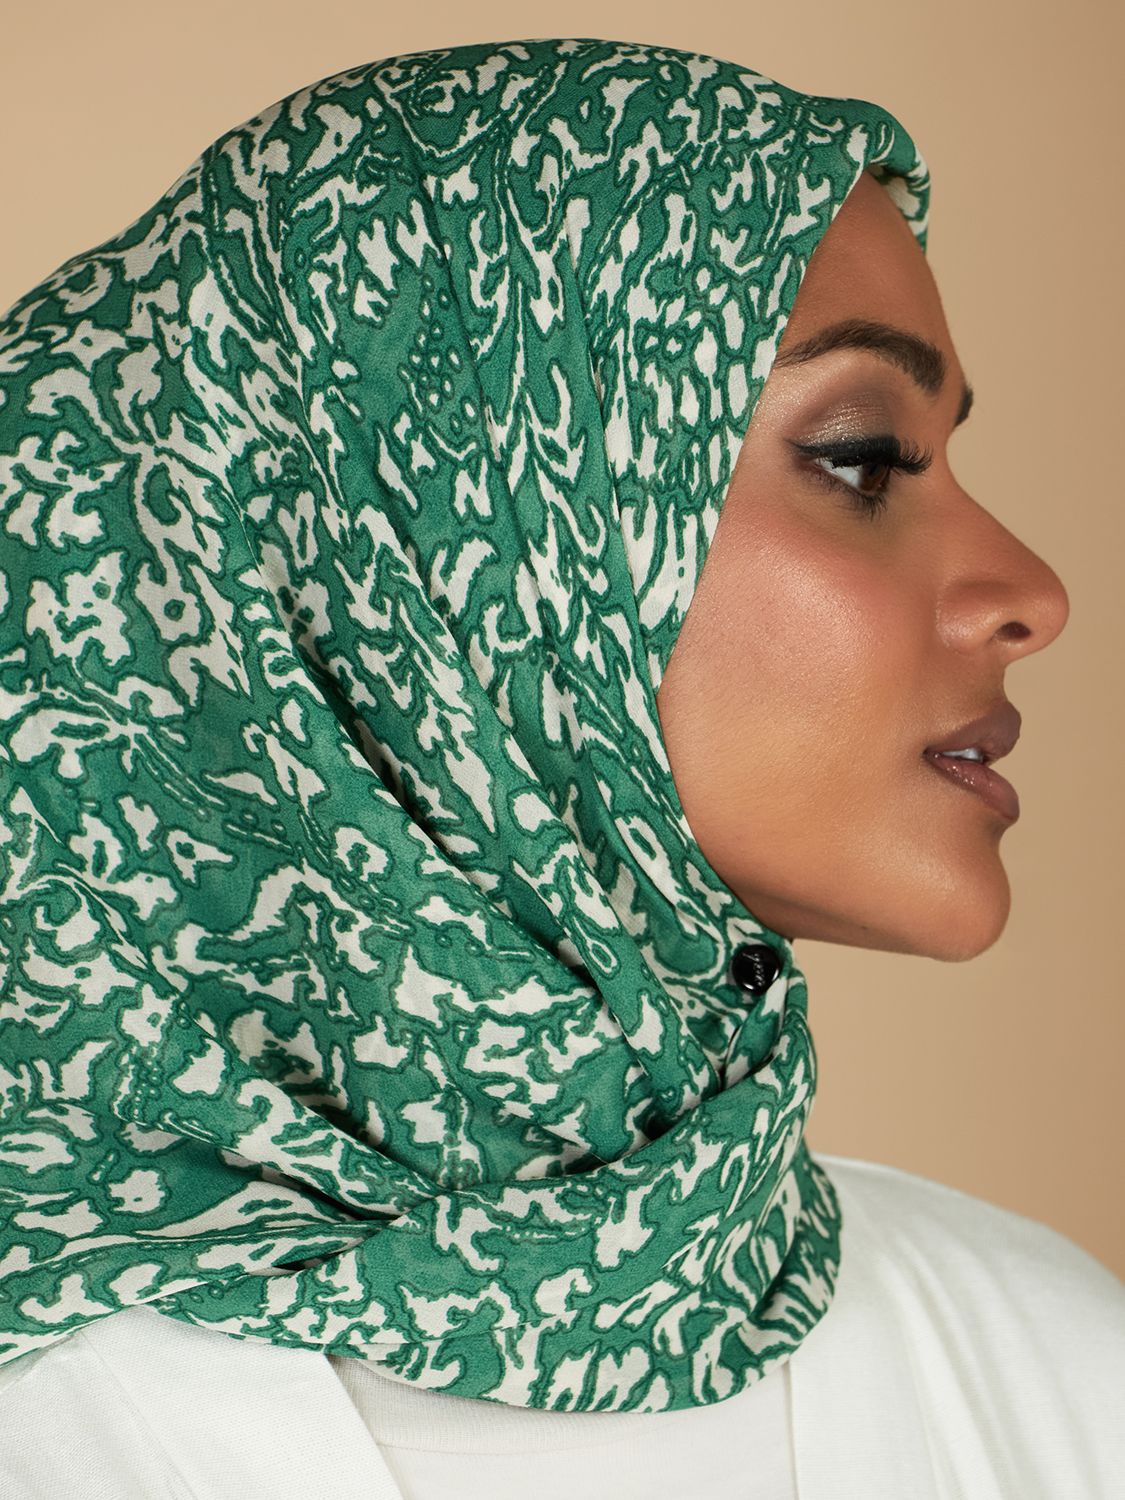 Aab Verdant Print Hijab, Multi, One Size